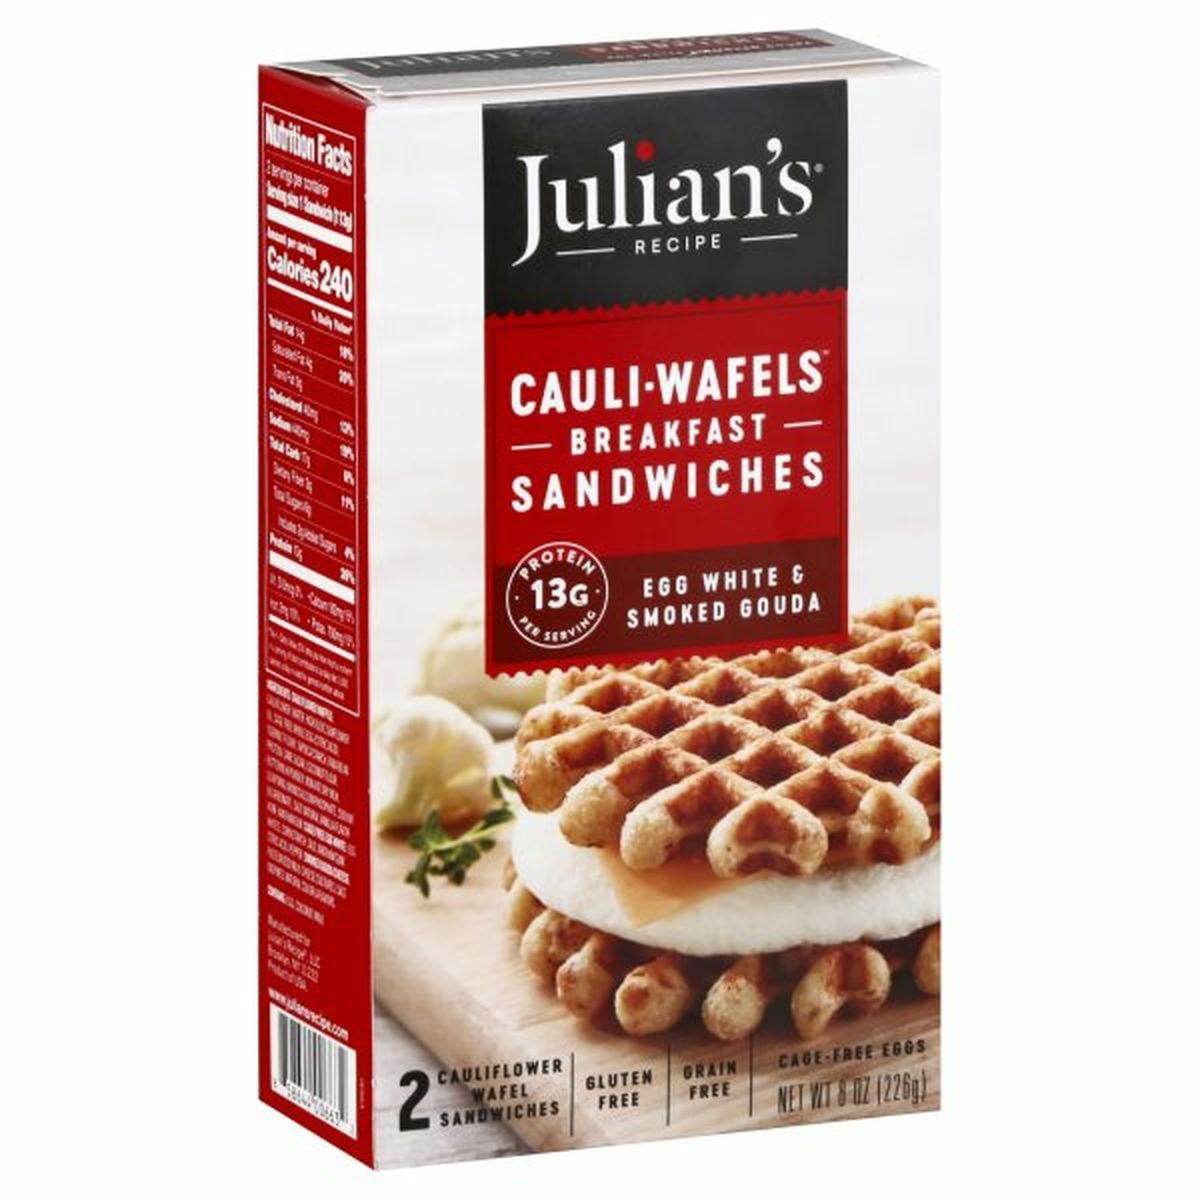 Calories in Julian's Recipe Cauli-Wafels, Egg White & Smoked Gouda